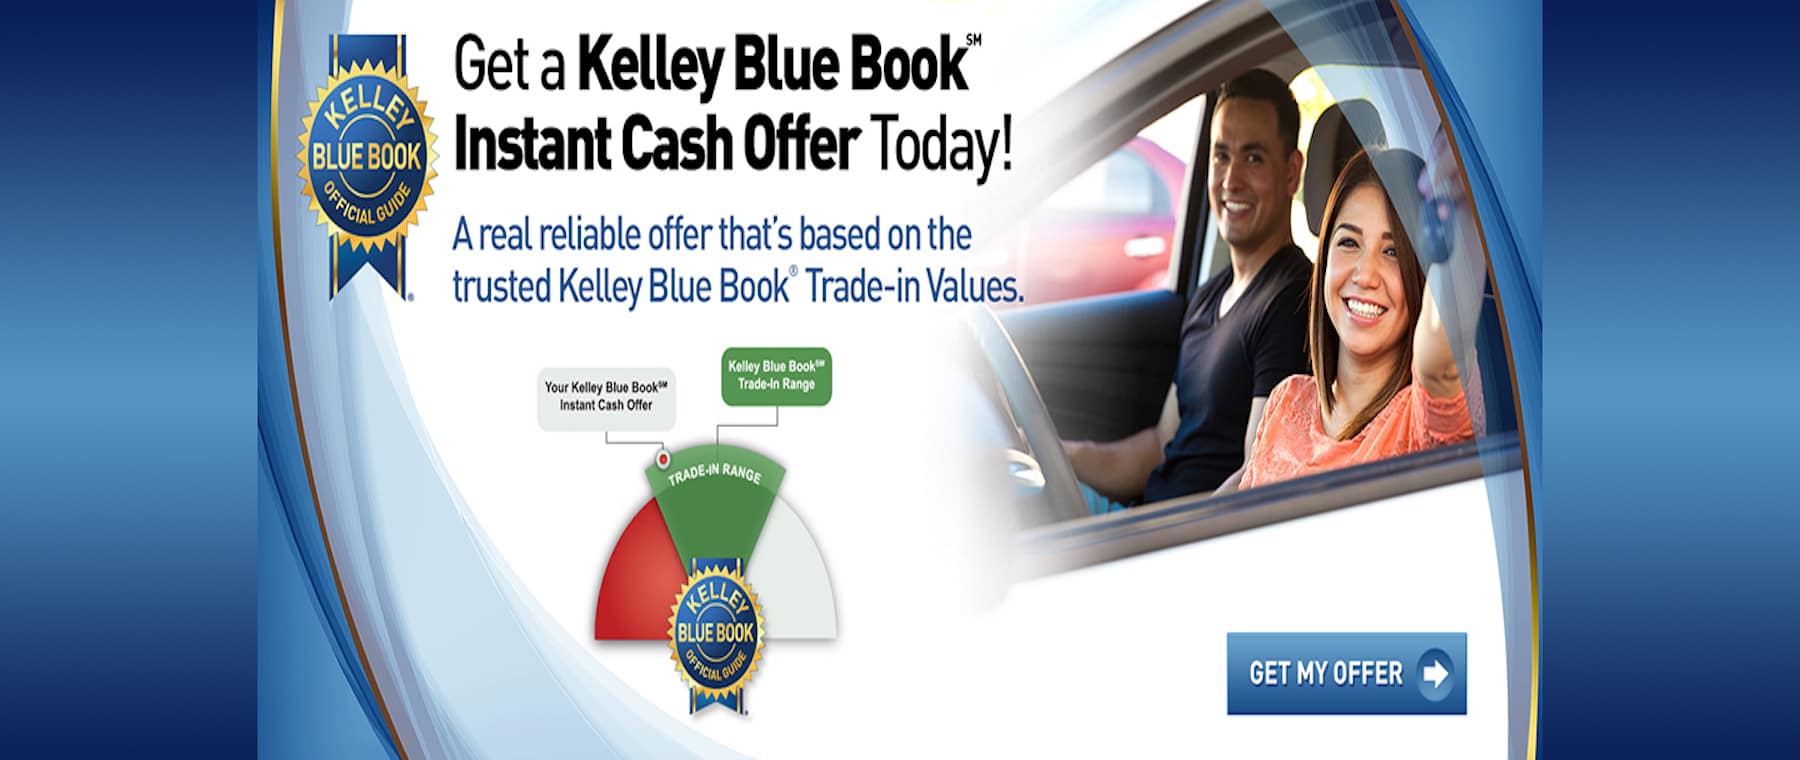 KBB Instant Cash Offer at LaFontaine Chevrolet of Dexter